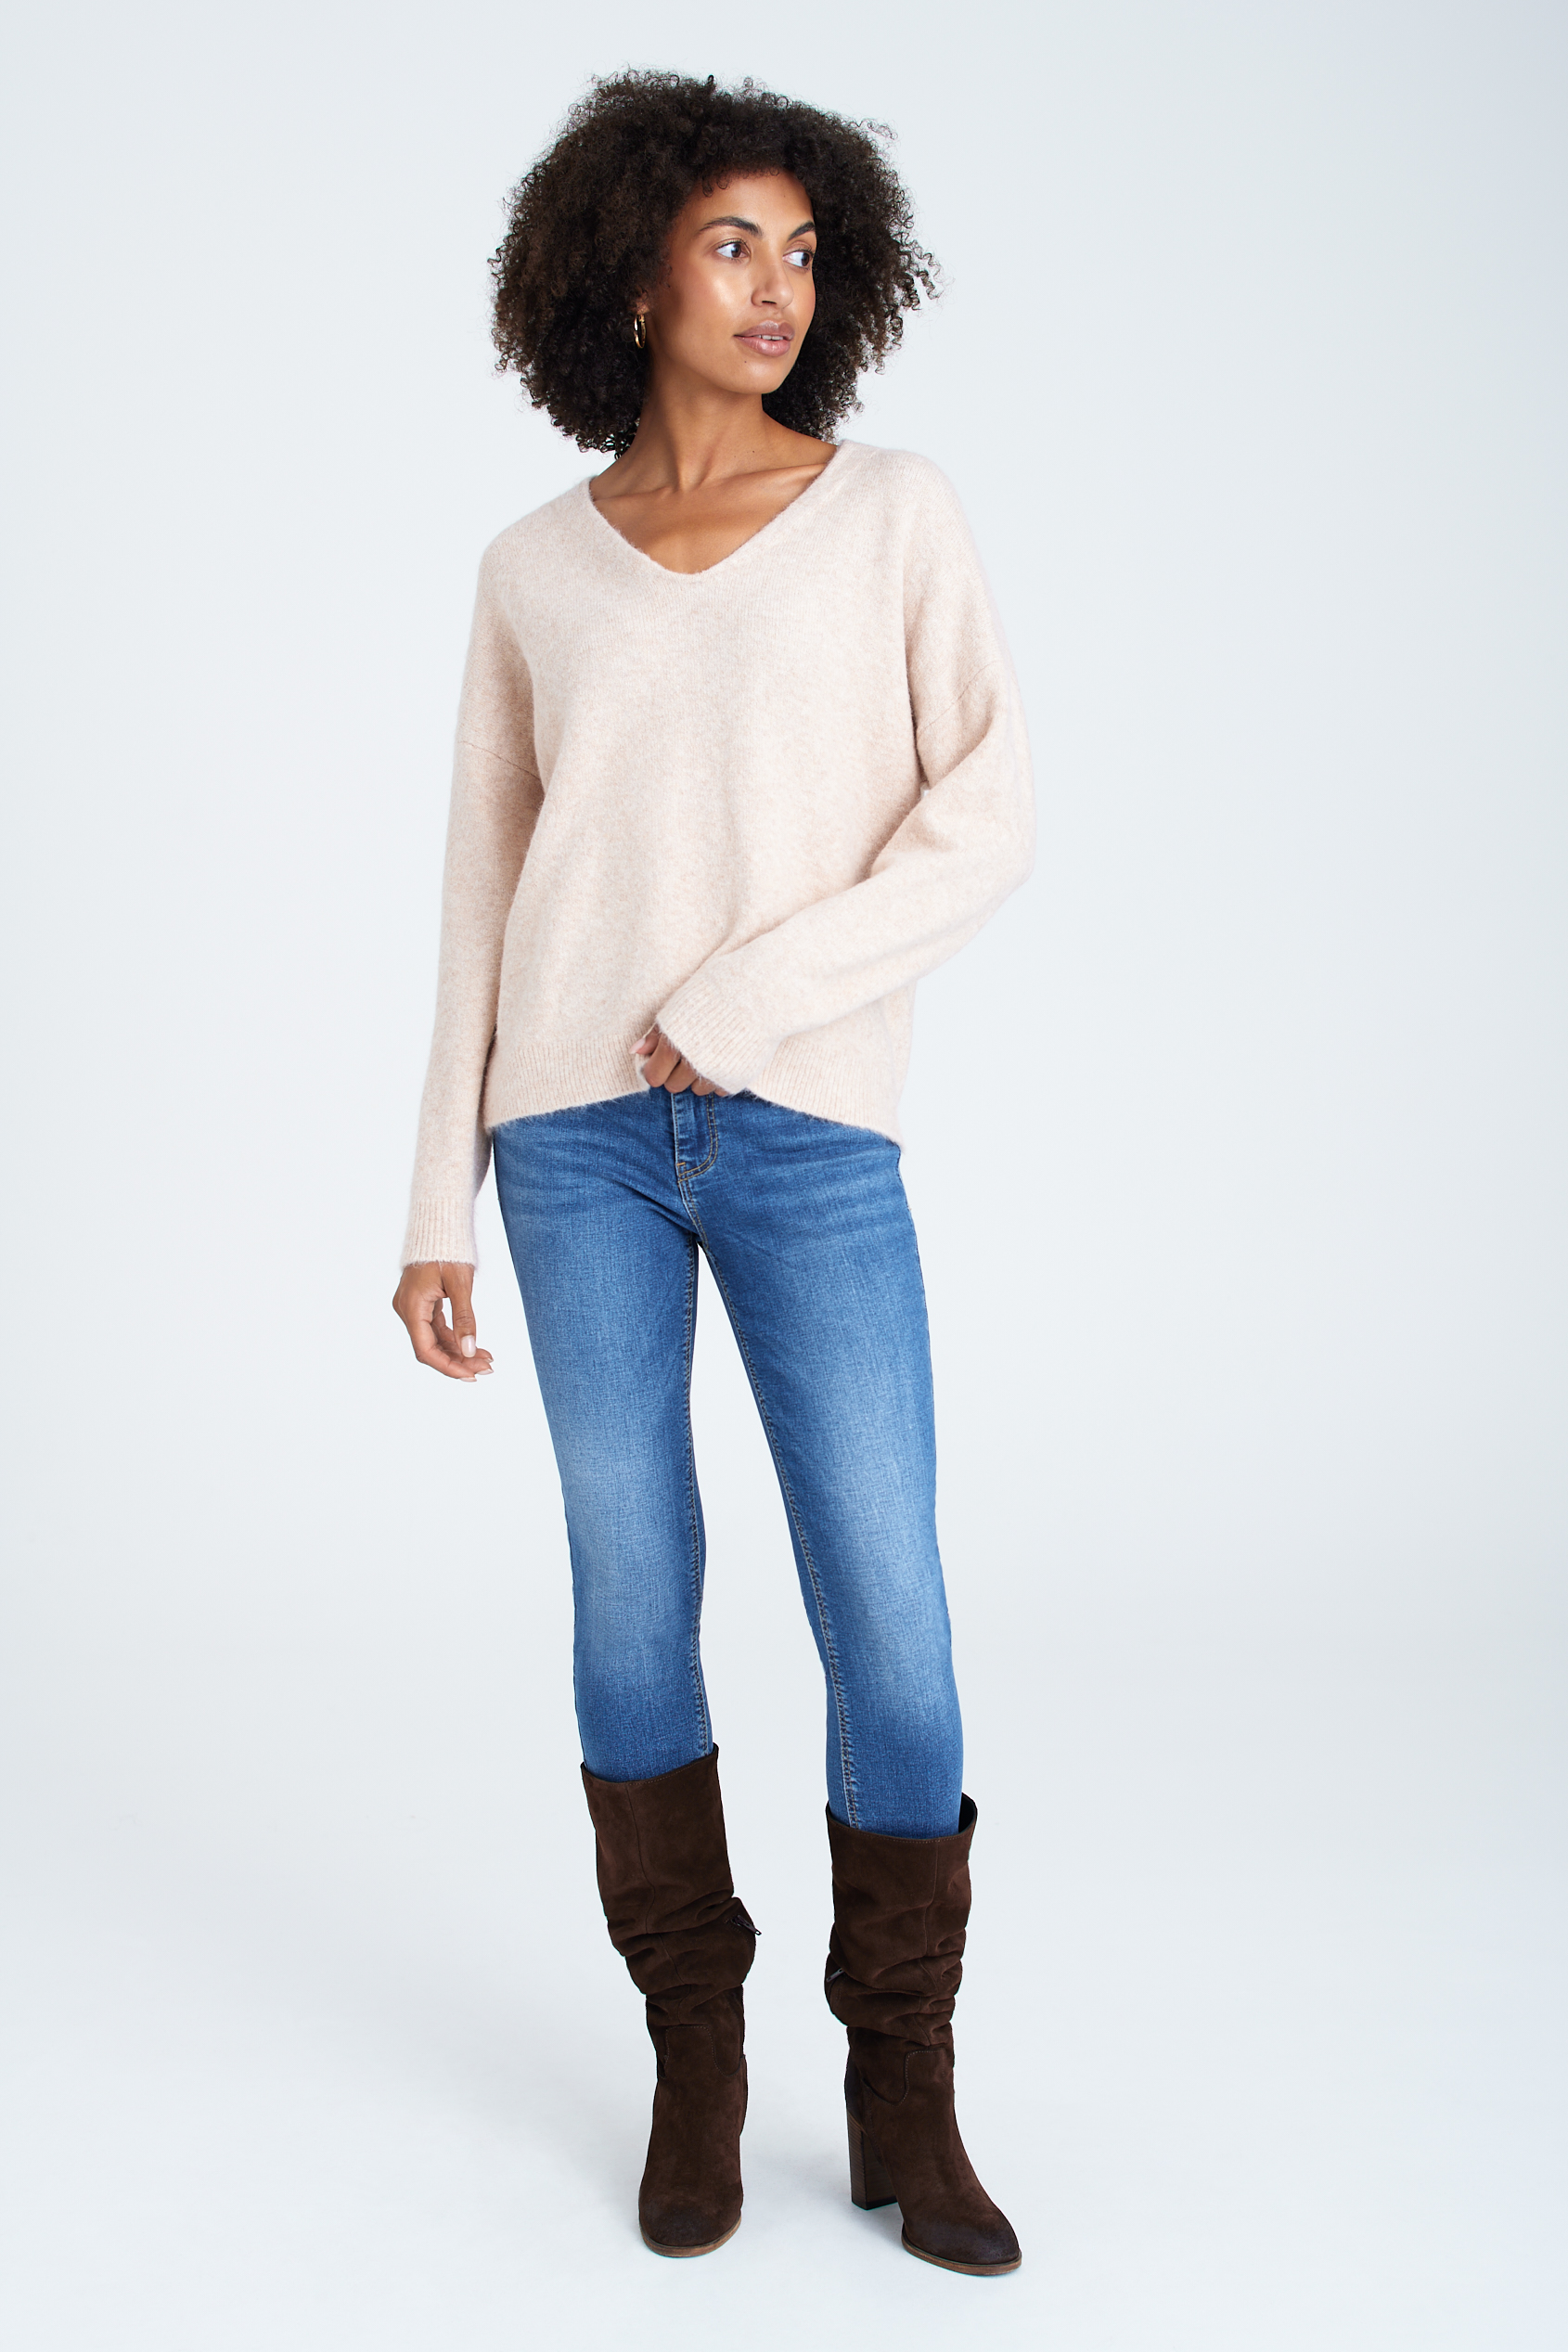 Greenpoint Woman's Sweater SWE636W2280M00